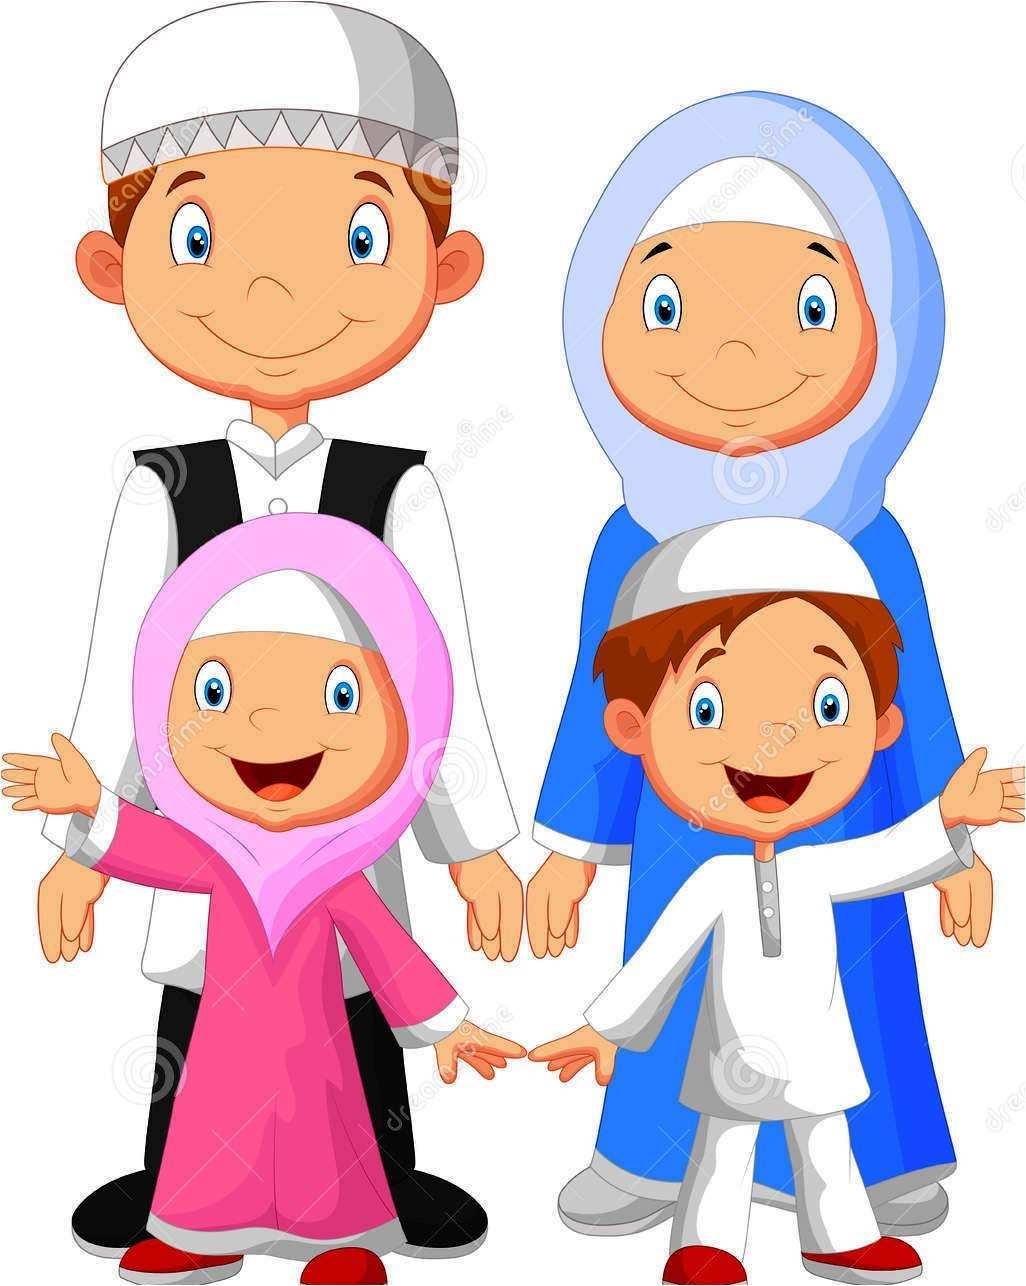 96 Gambar Kartun Muslimah Sakit Hati Gratis Download Cikimmcom